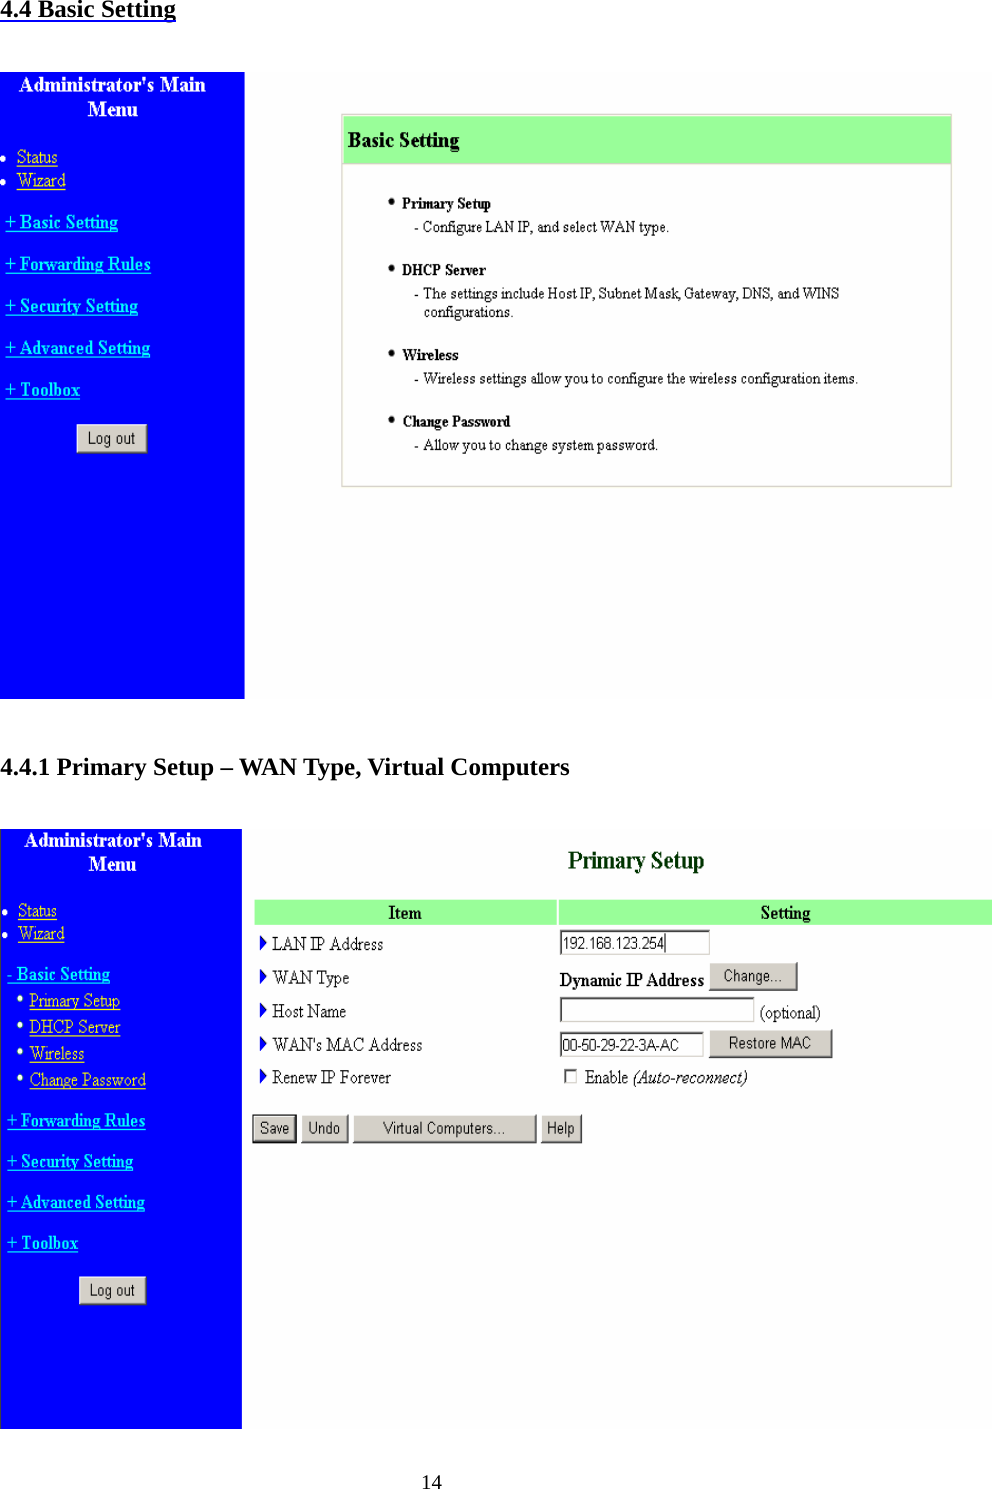 4.4 Basic Setting    4.4.1 Primary Setup – WAN Type, Virtual Computers   14